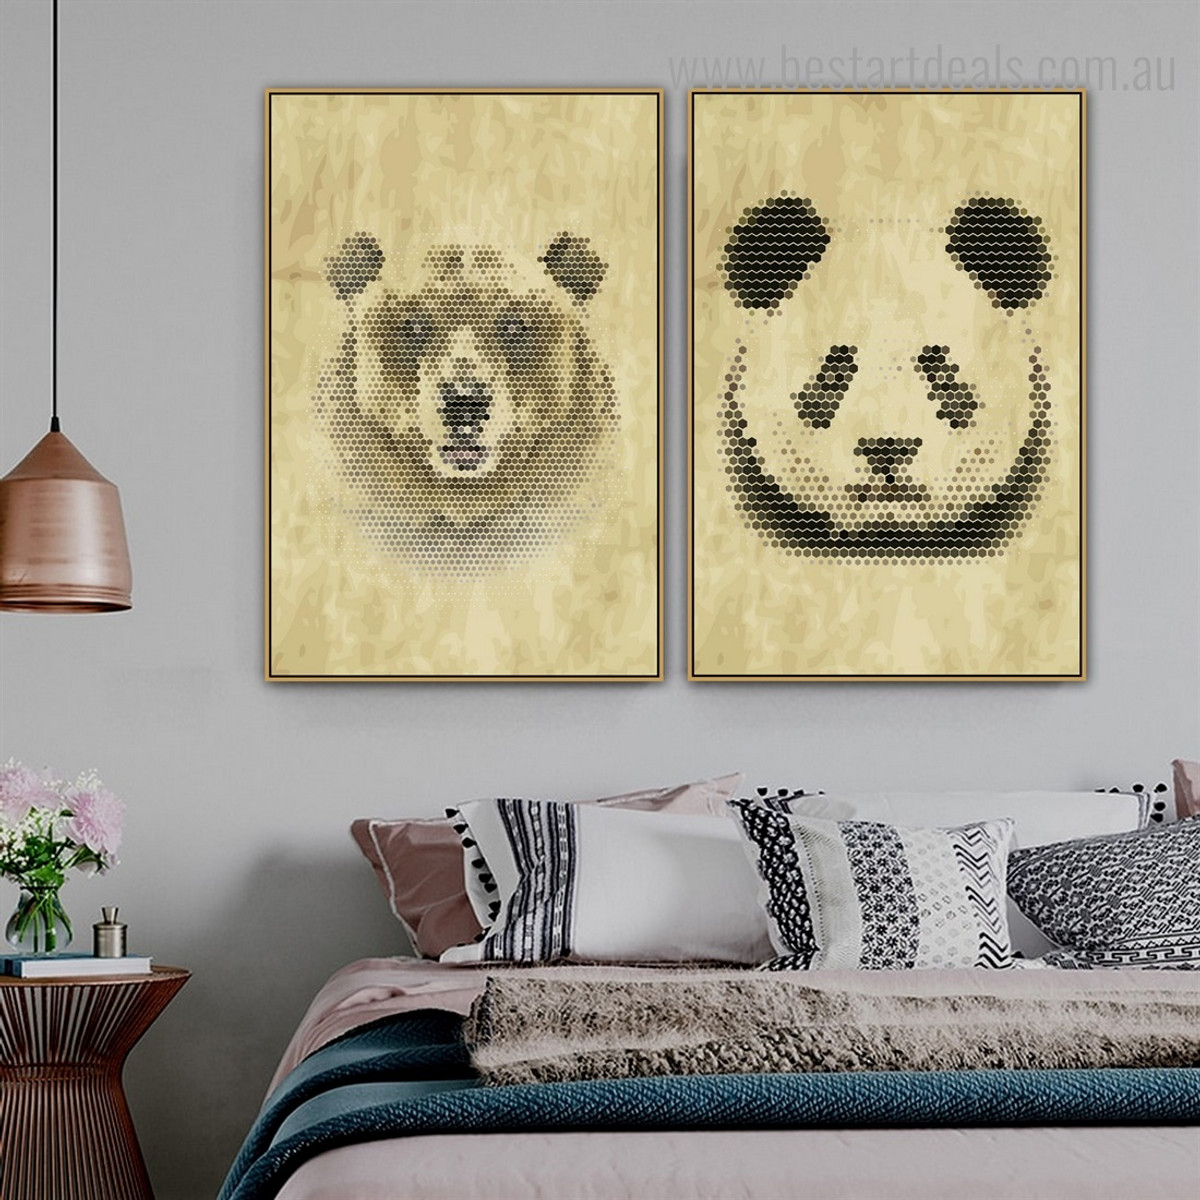 Bear Panda Animal Modern Framed Effigy Image Canvas Print for Room Wall Ornament